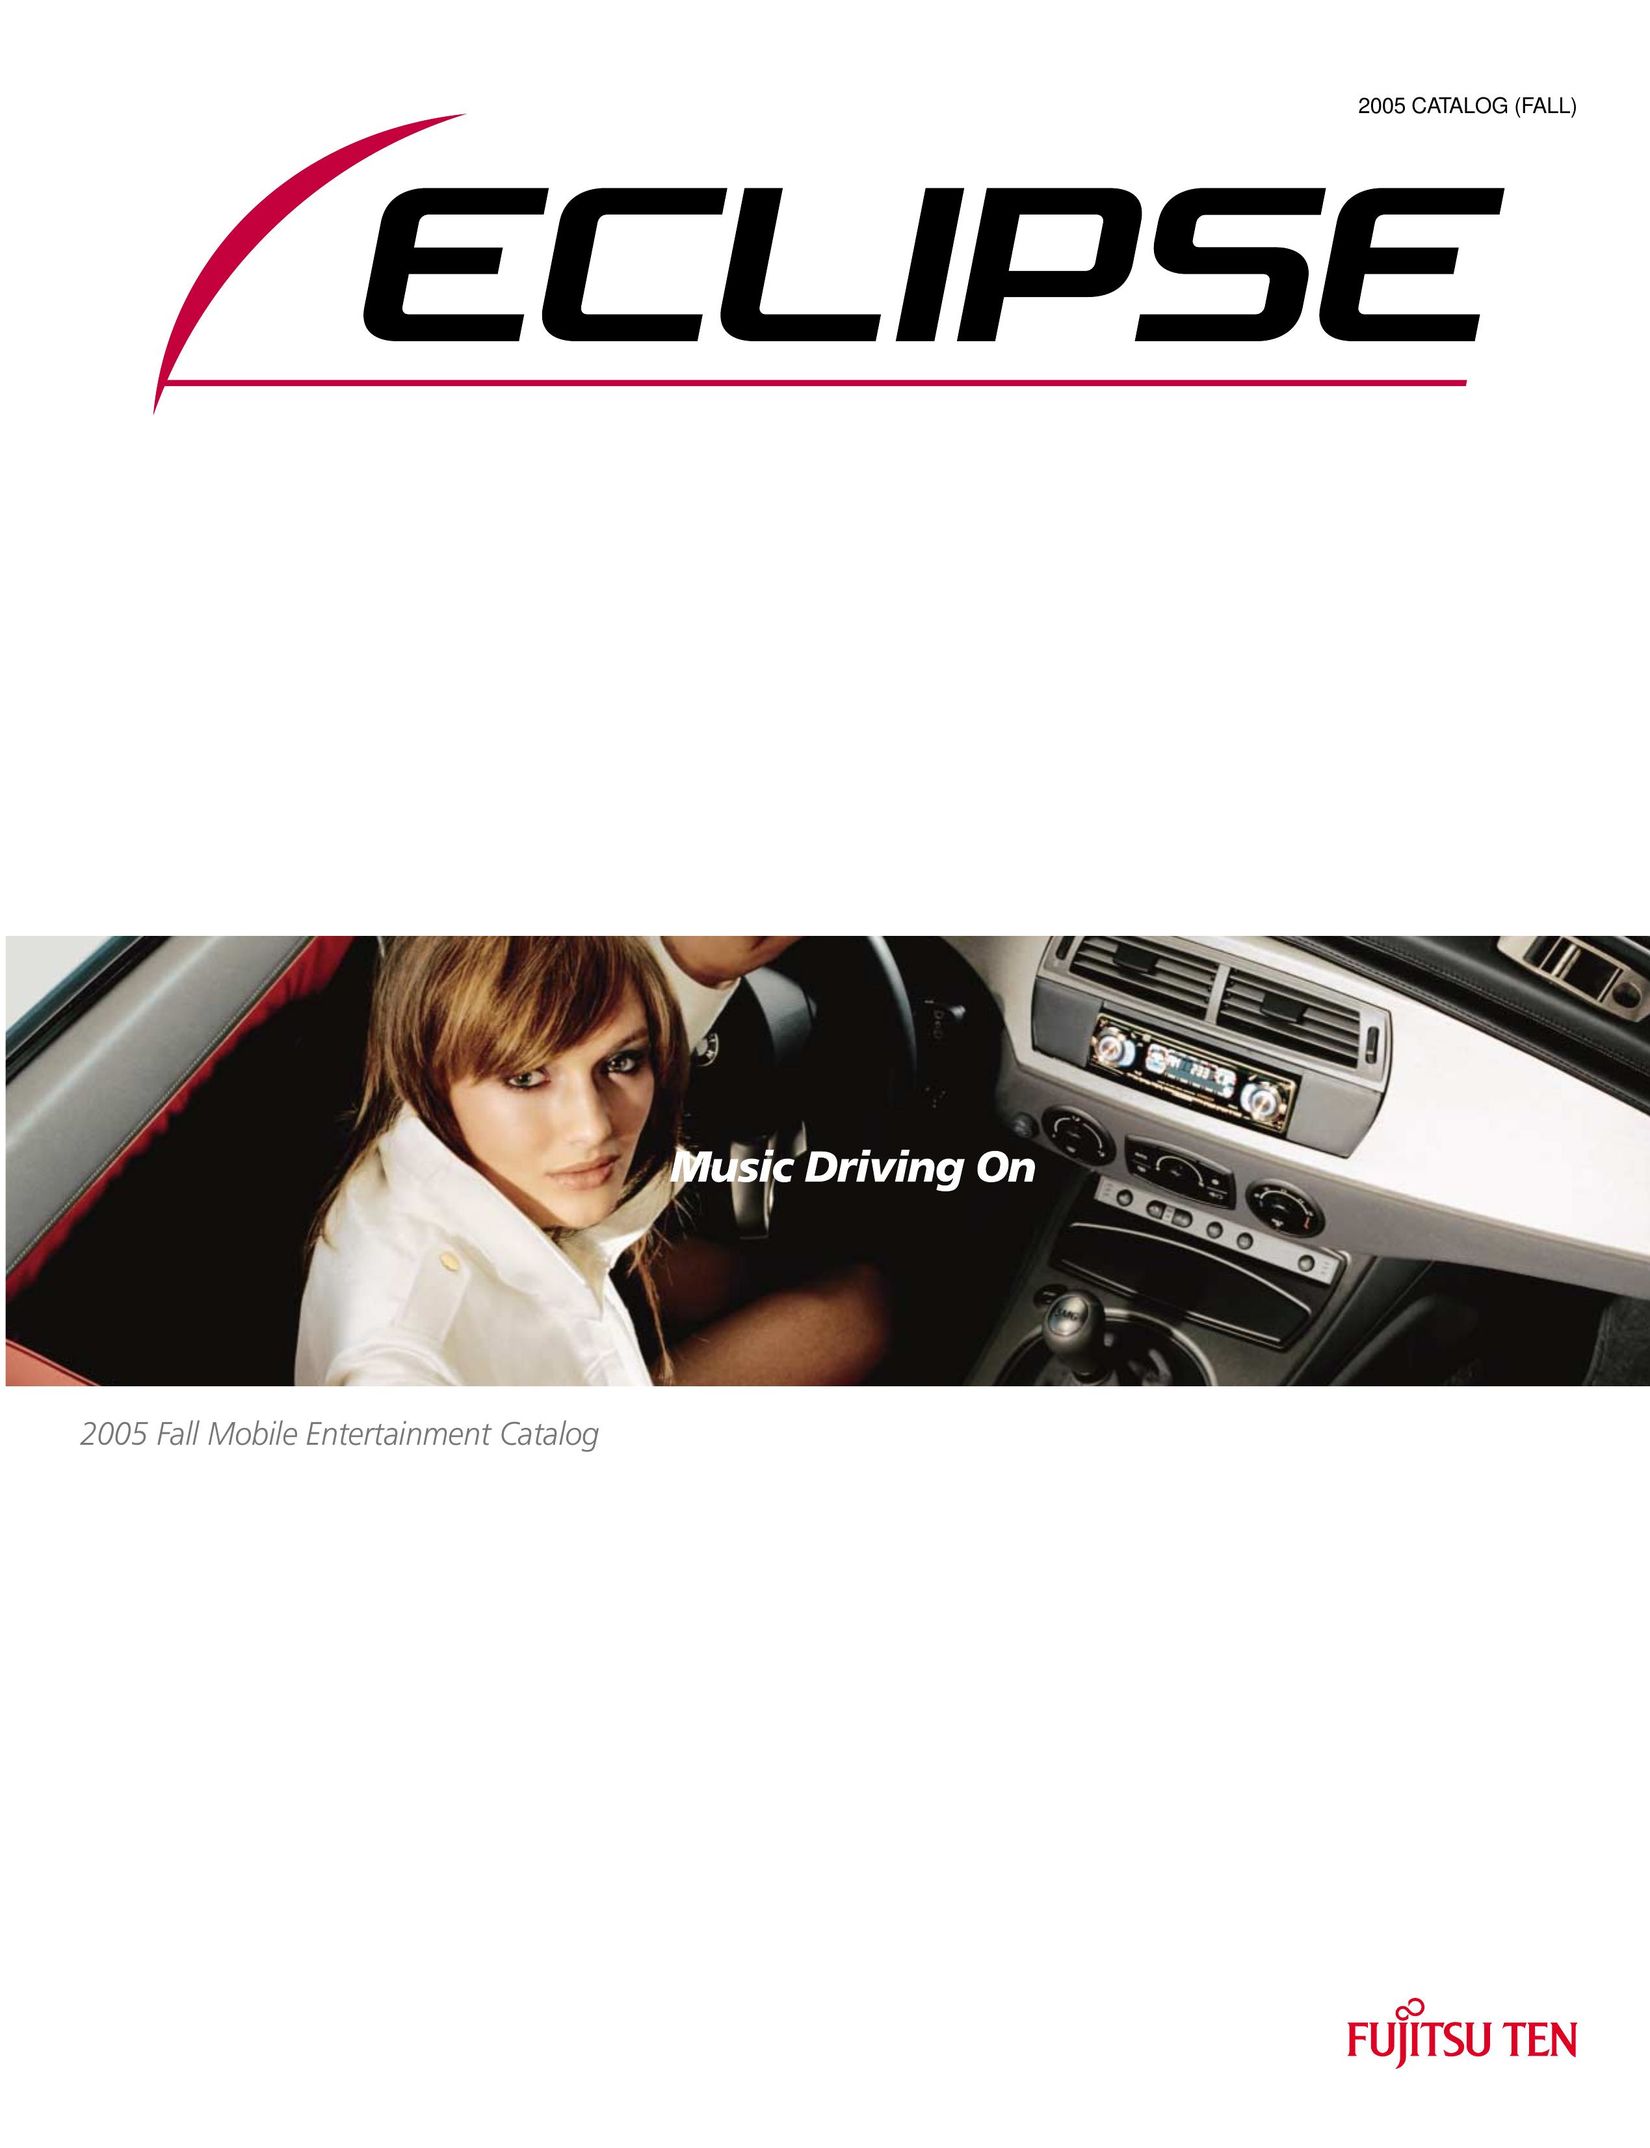 Eclipse - Fujitsu Ten AVX2404 MP3 Player User Manual